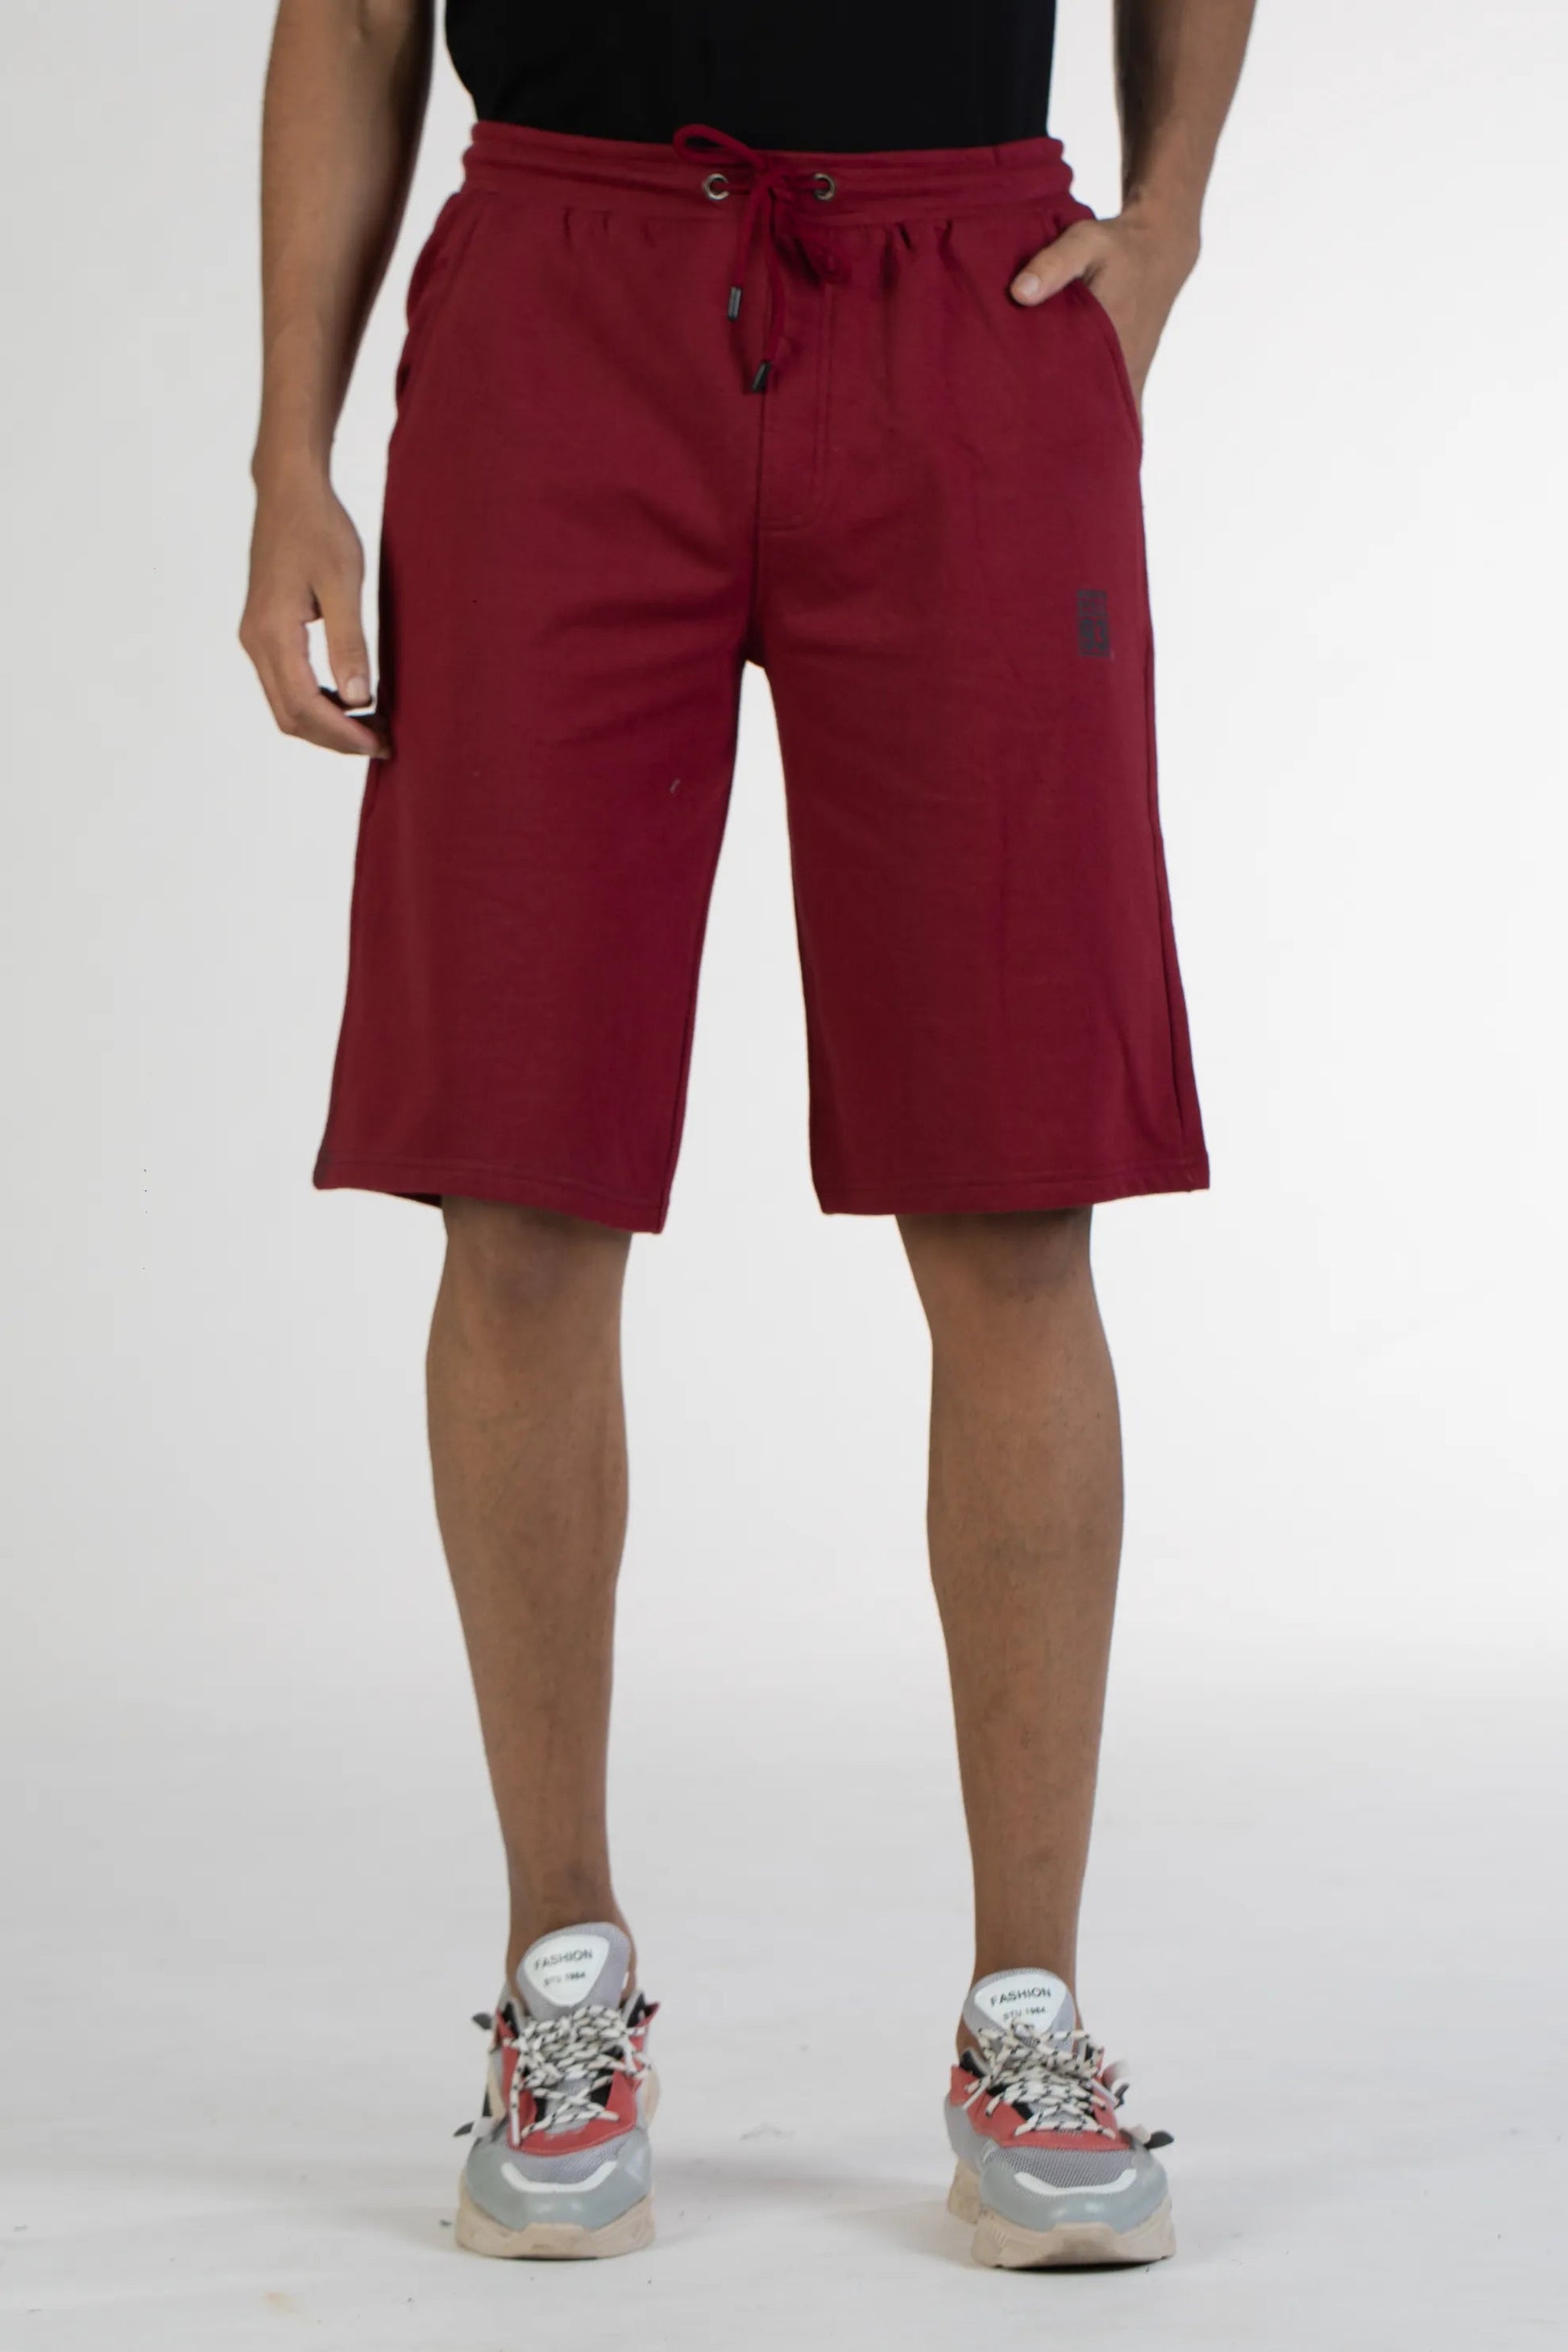 Burgundy solid knit cotton men's shorts